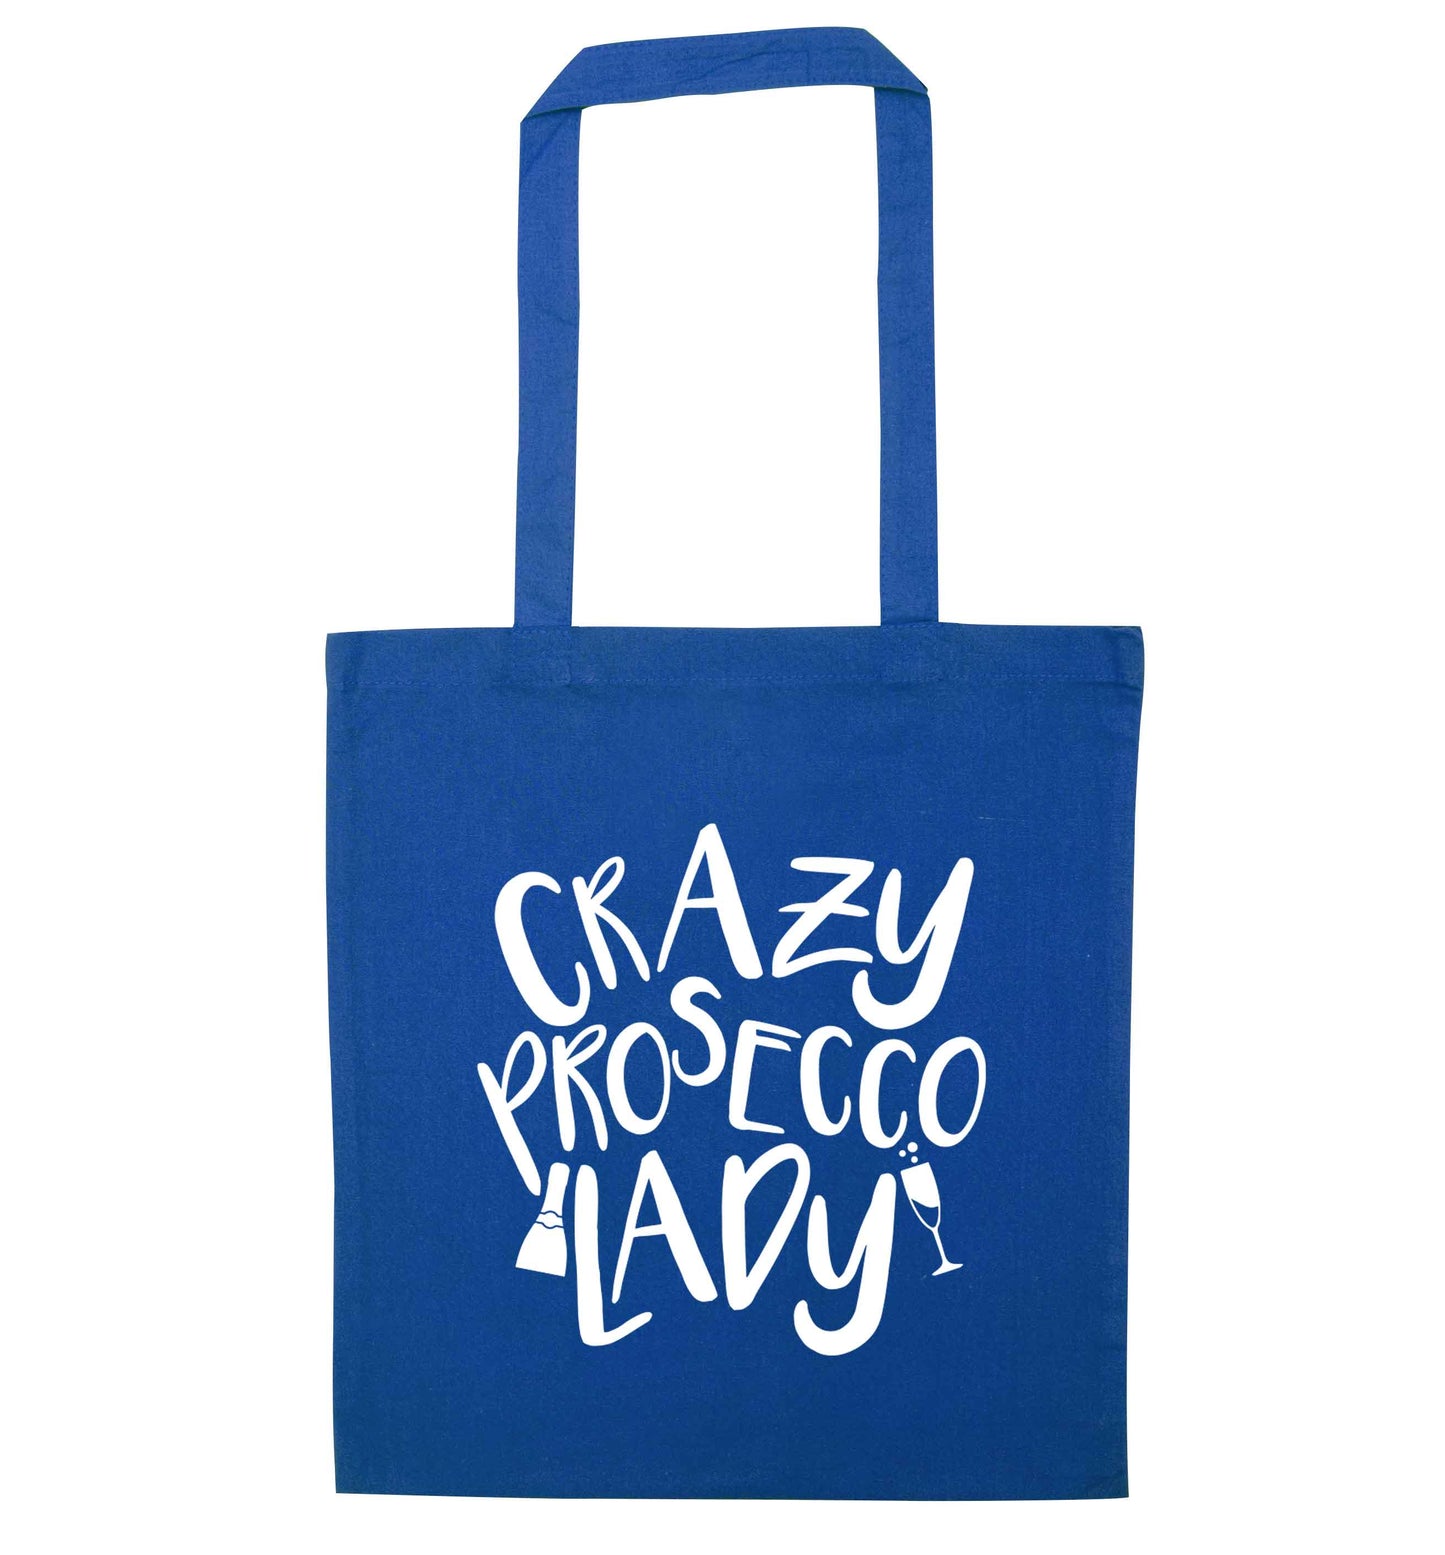 Crazy prosecco lady blue tote bag